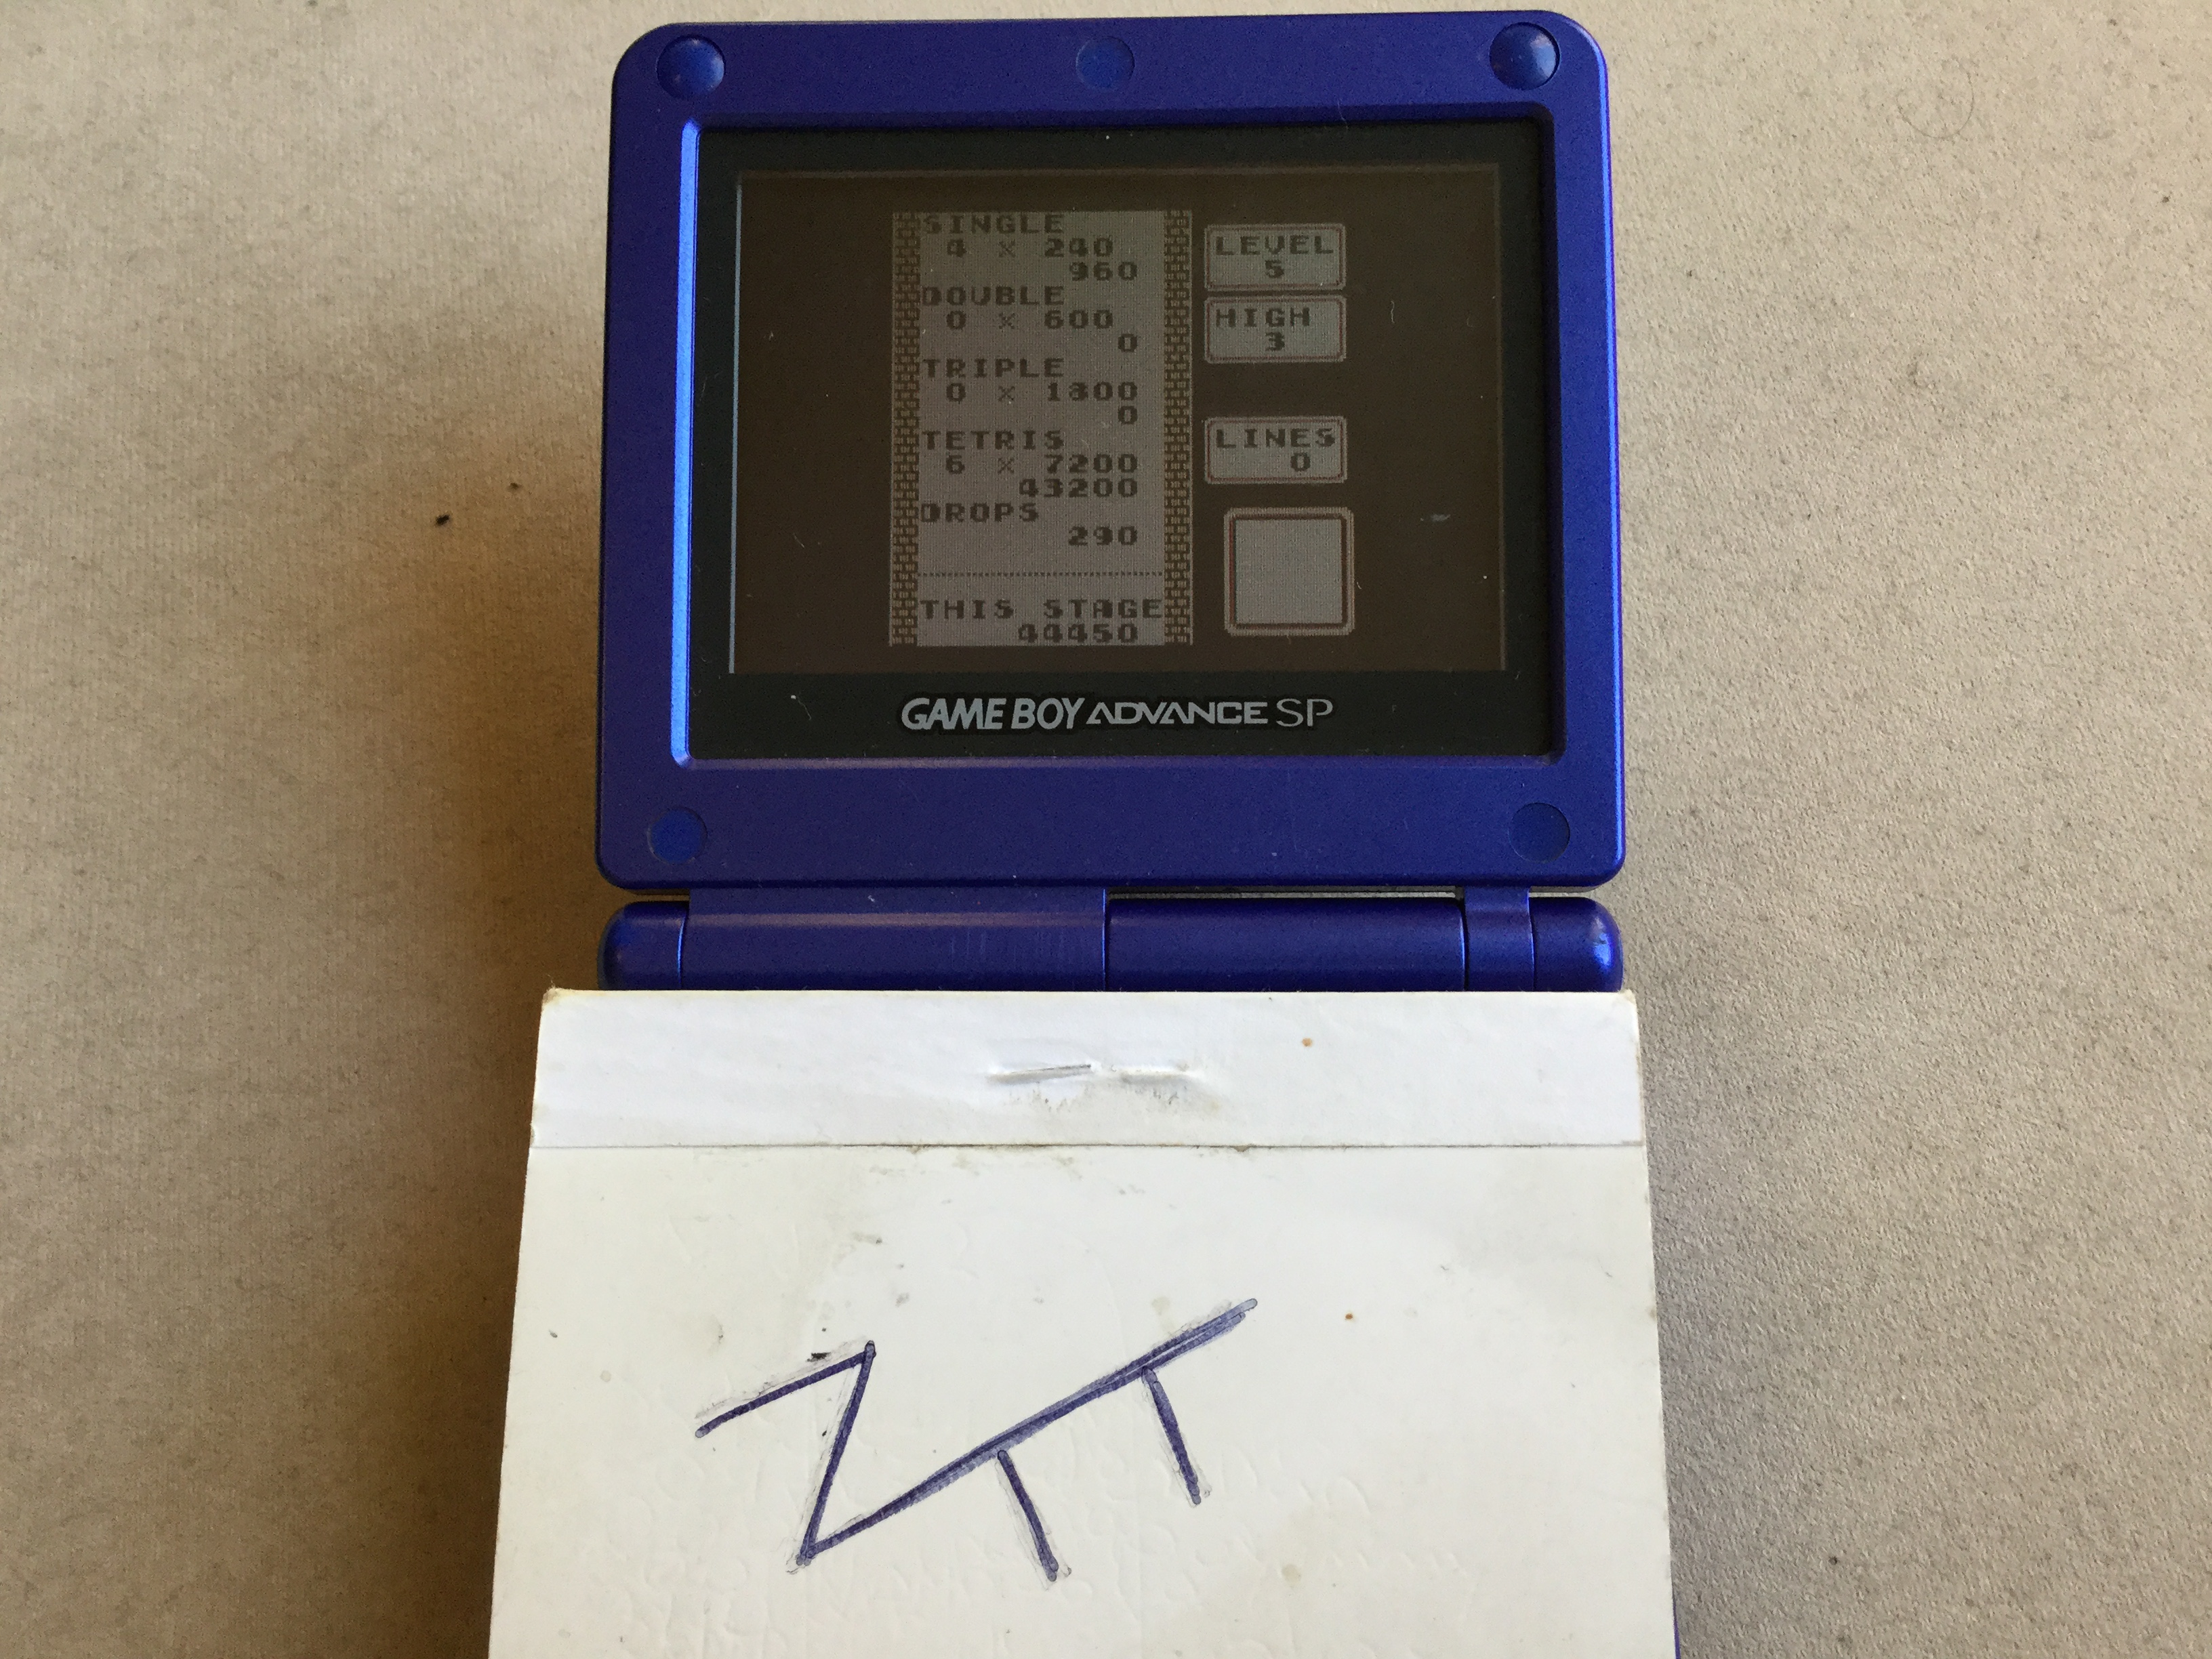 Frankie: Tetris: Type B [Level 5 / High 3] (Game Boy) 44,450 points on 2019-12-31 01:35:56